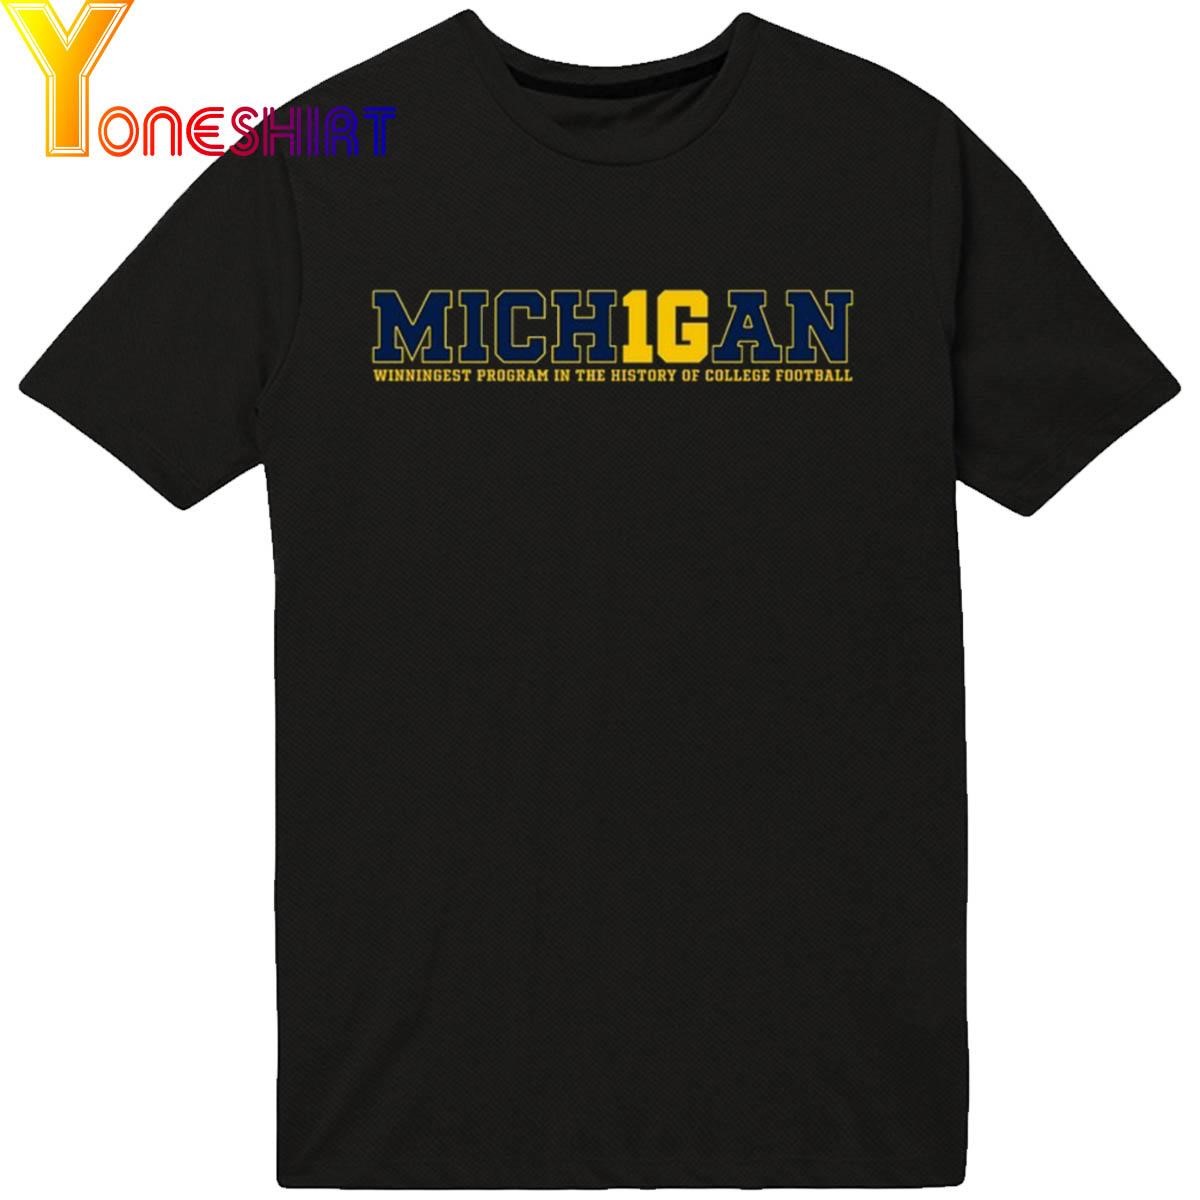 Mich1gan Winningest Program in the history of College Football Shirt